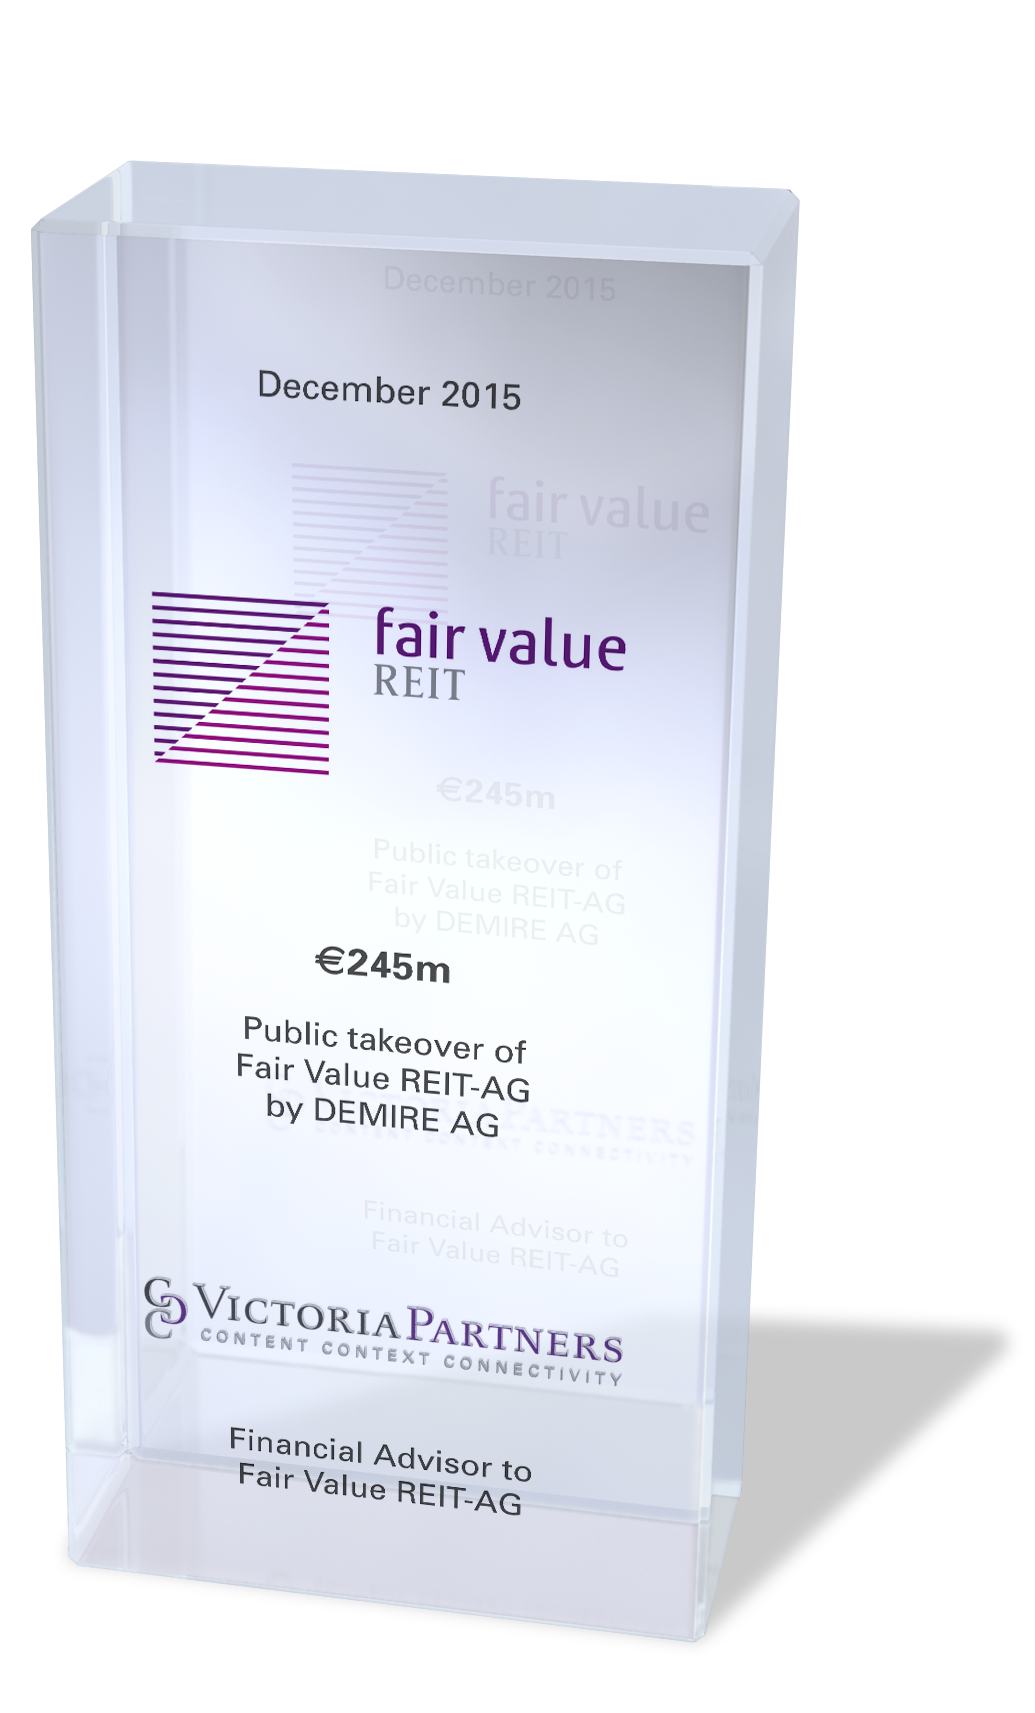 VICTORIAPARTNERS - Financial Advisor to Fair Value REIT-AG - December 2015